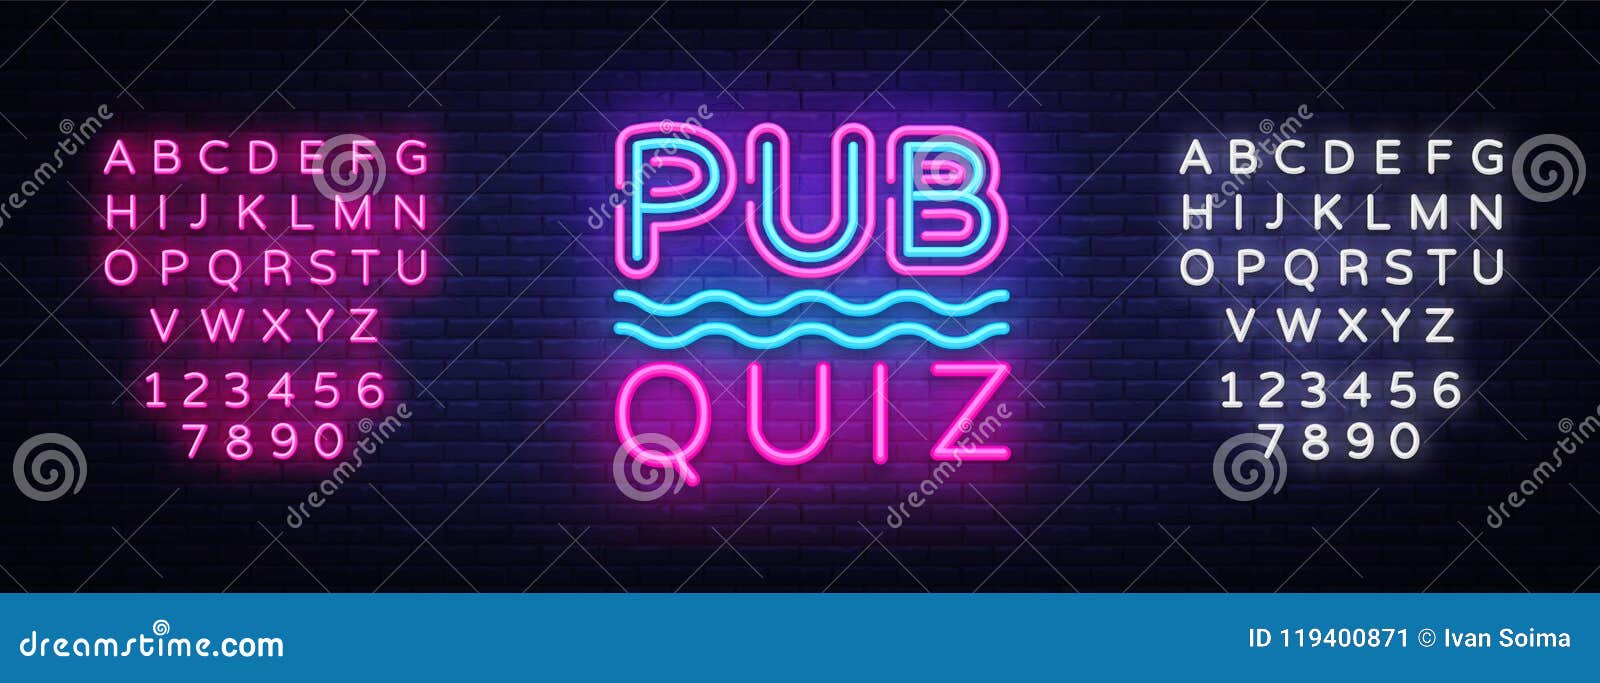 pub quiz night announcement poster   template. quiz neon signboard, light banner. pub quiz held in pub or